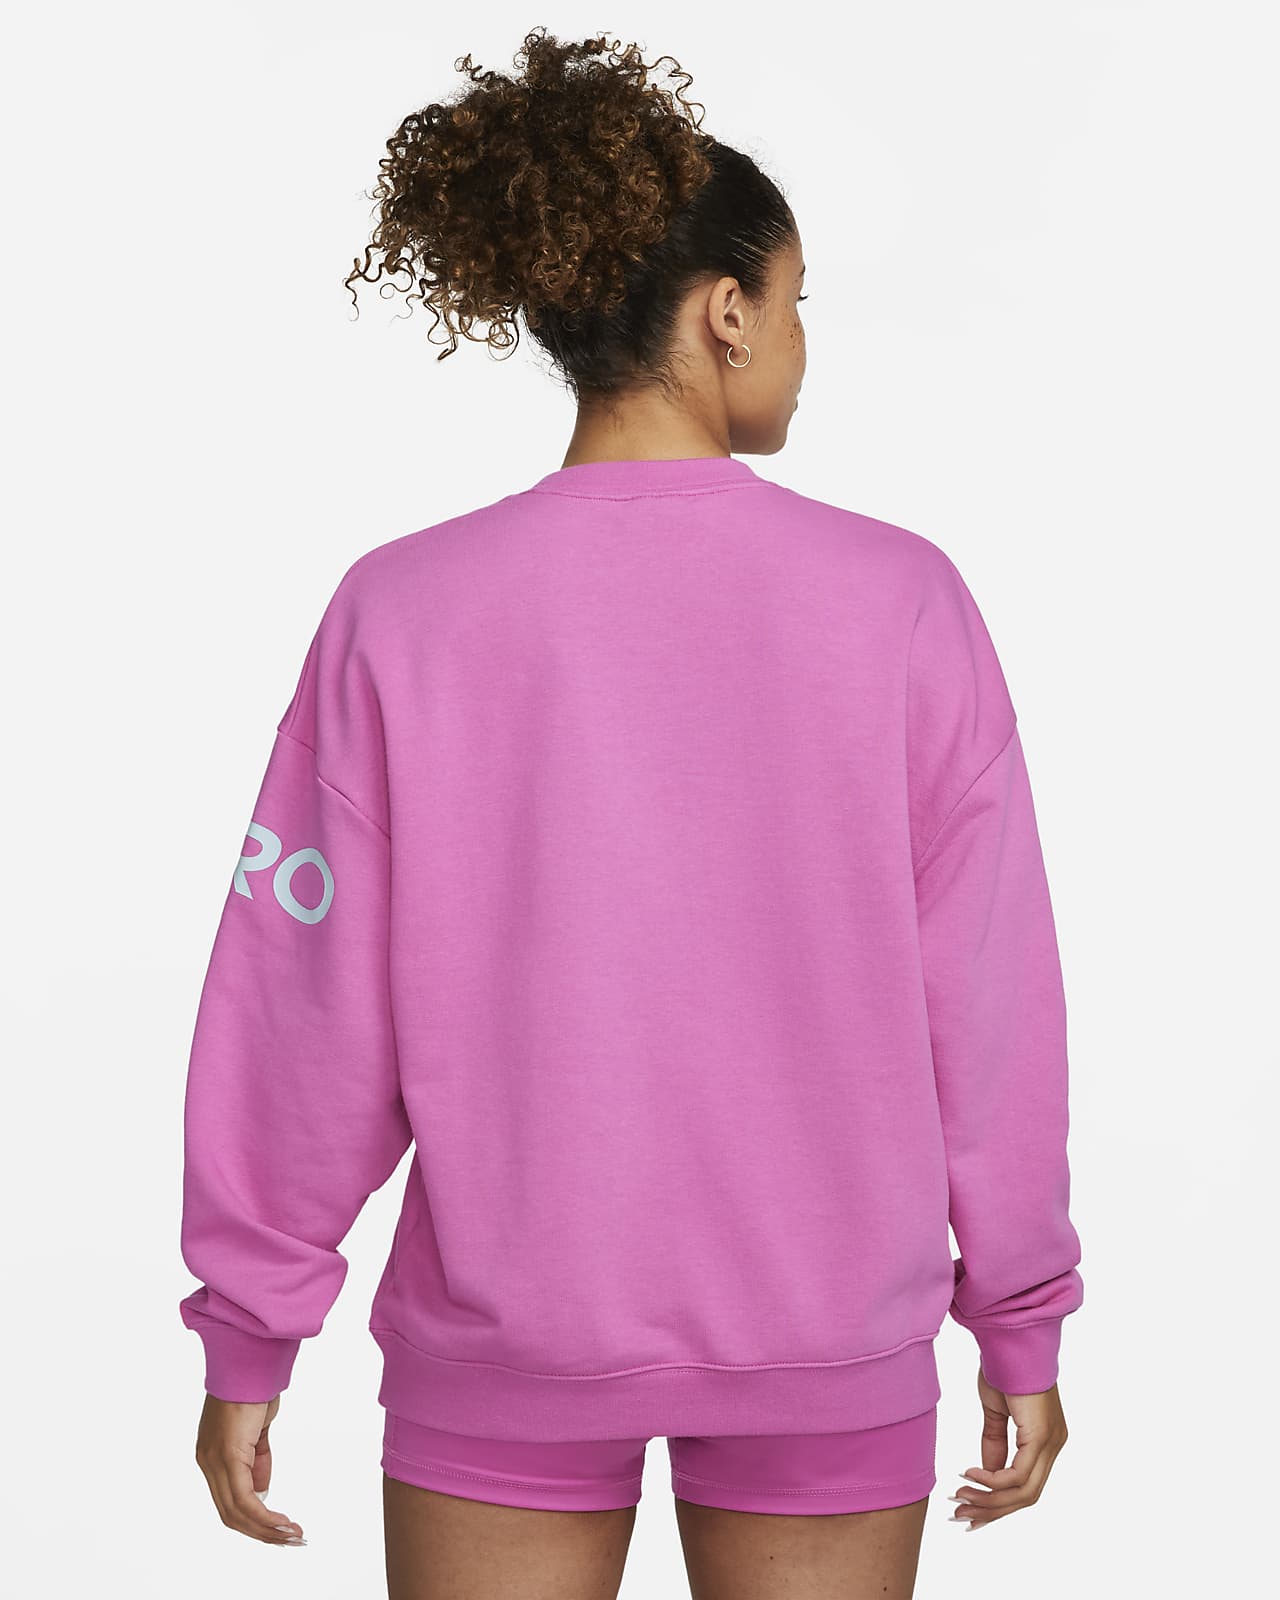 NWT Nike Drifit Womens Graphic Get Fit Crewneck Sweatshirt Size 2X Pink  White